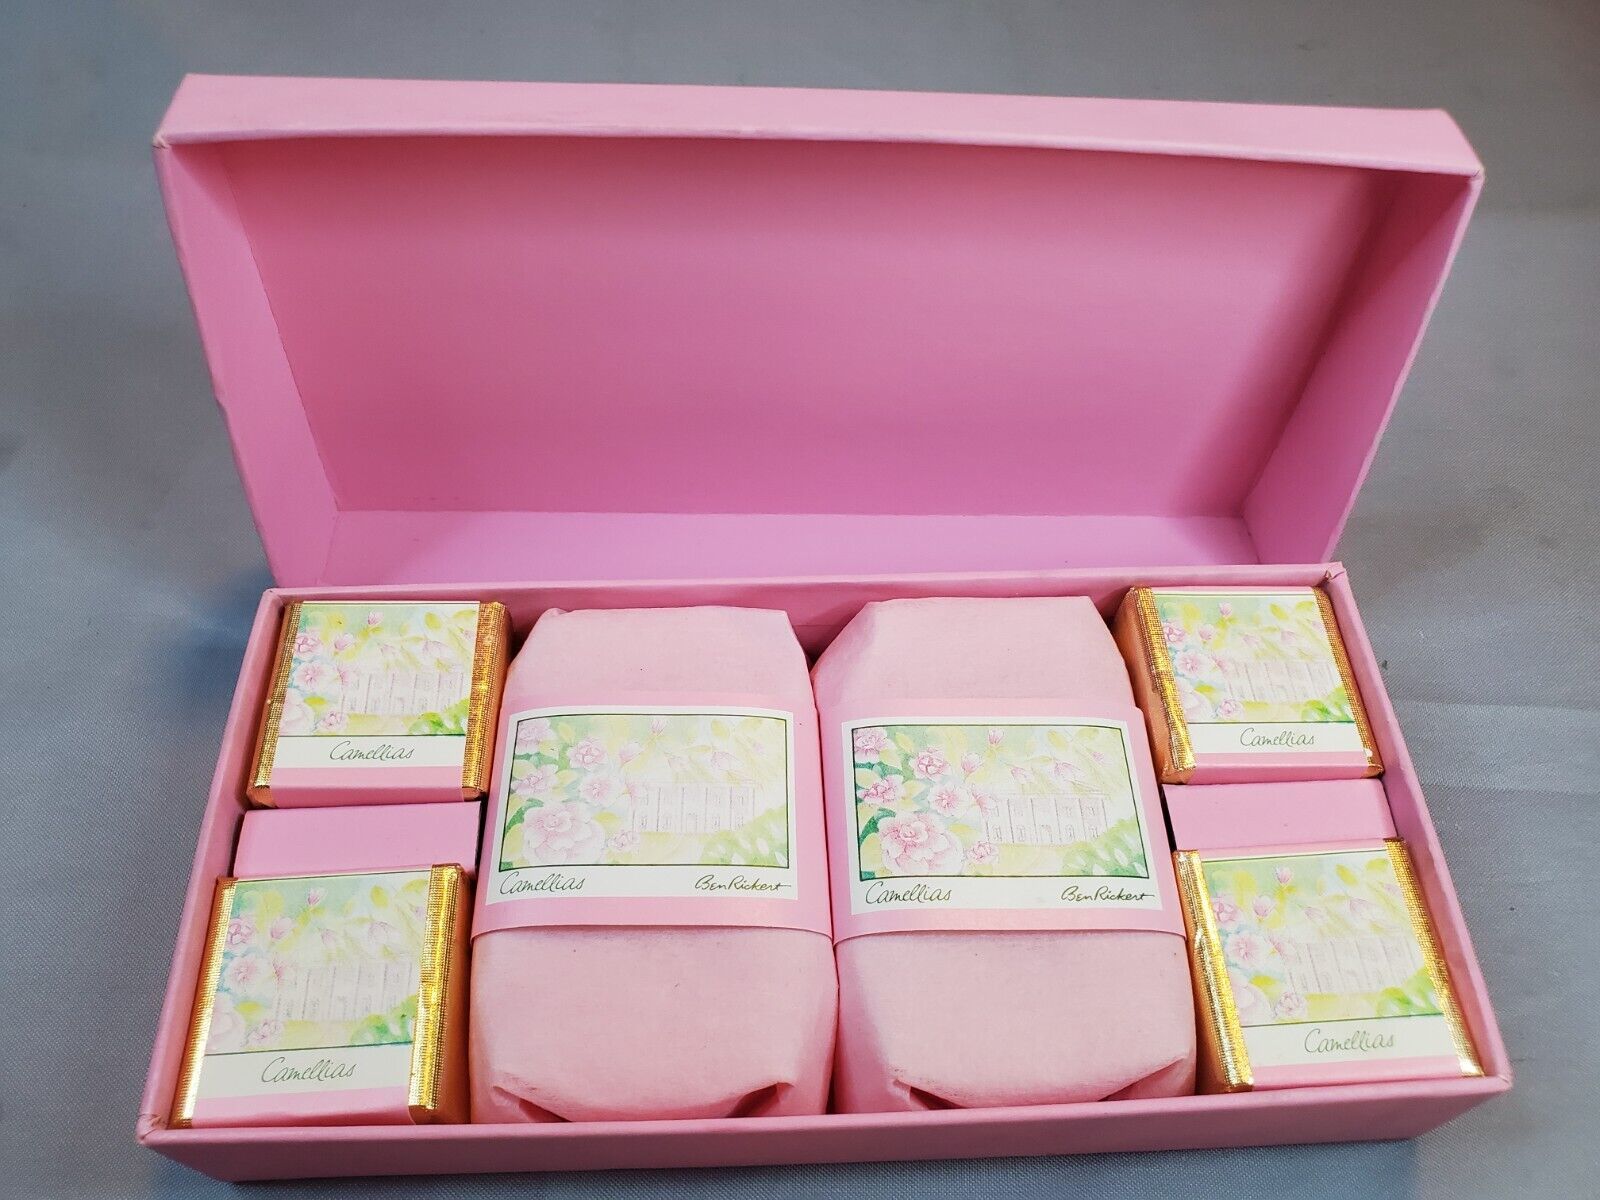 Ben Rickert Camellias Soap Cakes and Bath Cubes Pink Vintage Vanity Set - $14.80